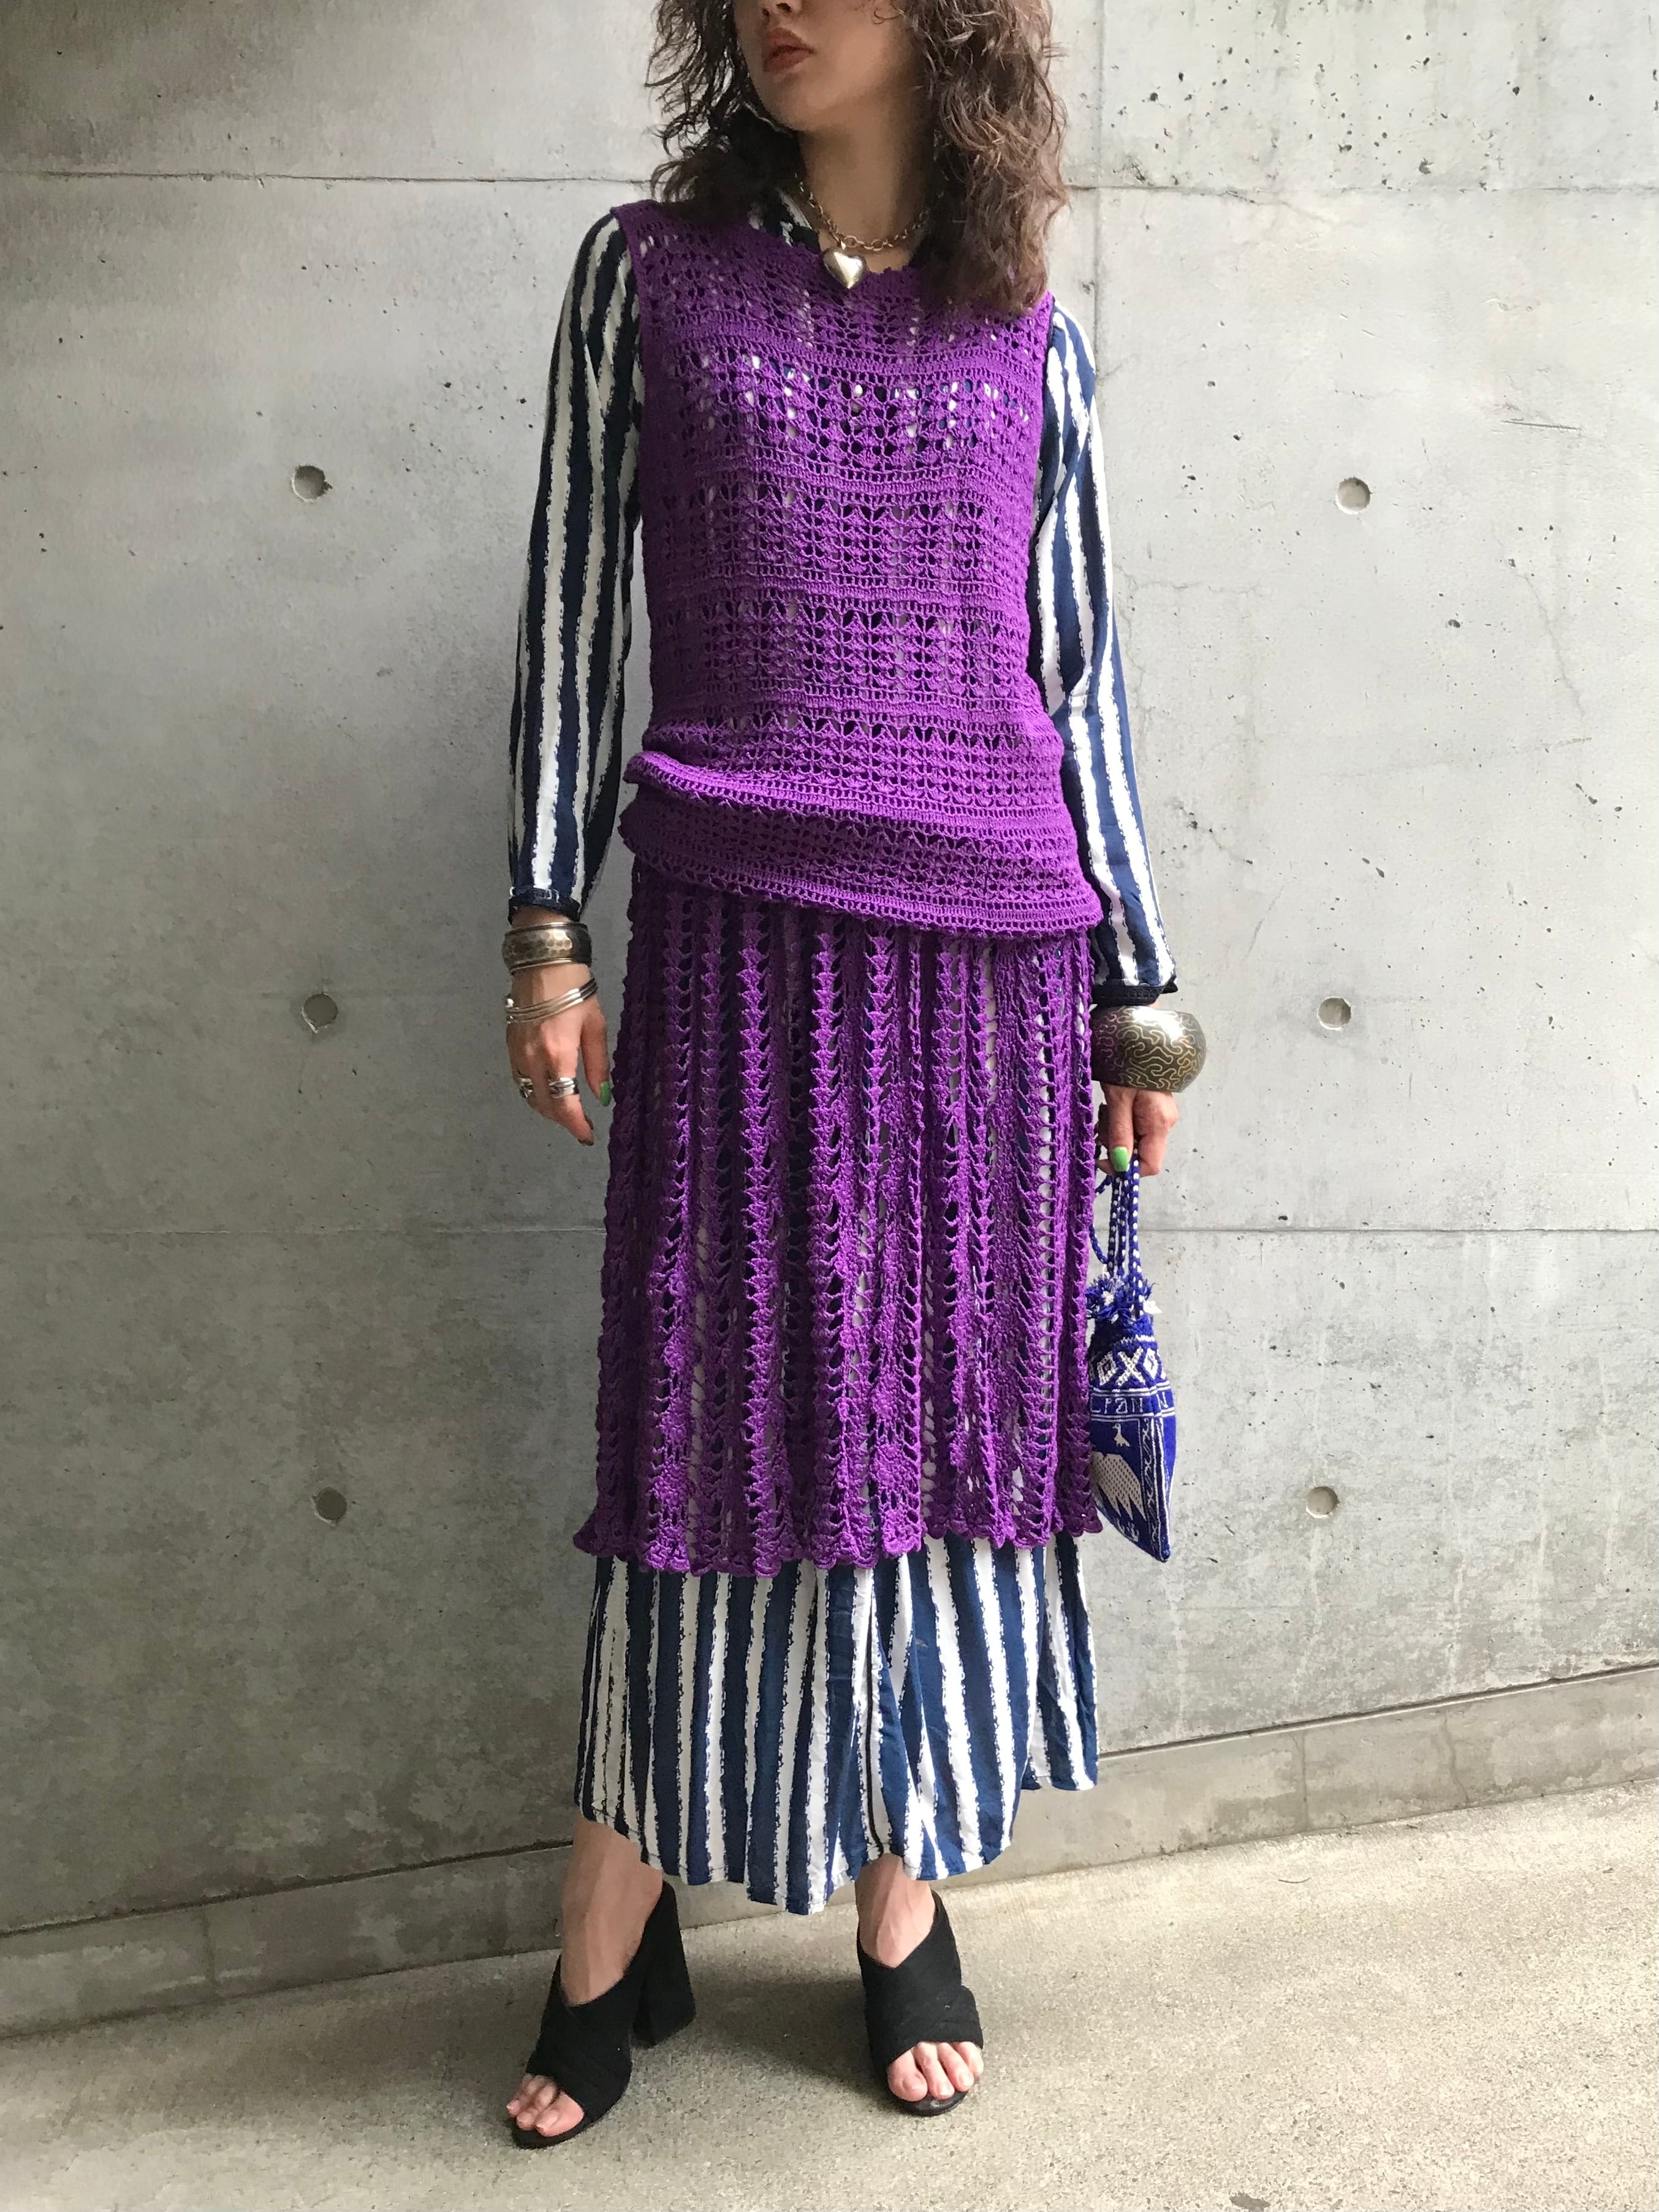 70s handmade purple crochet long dress ( ヴィンテージ ハンドメイド